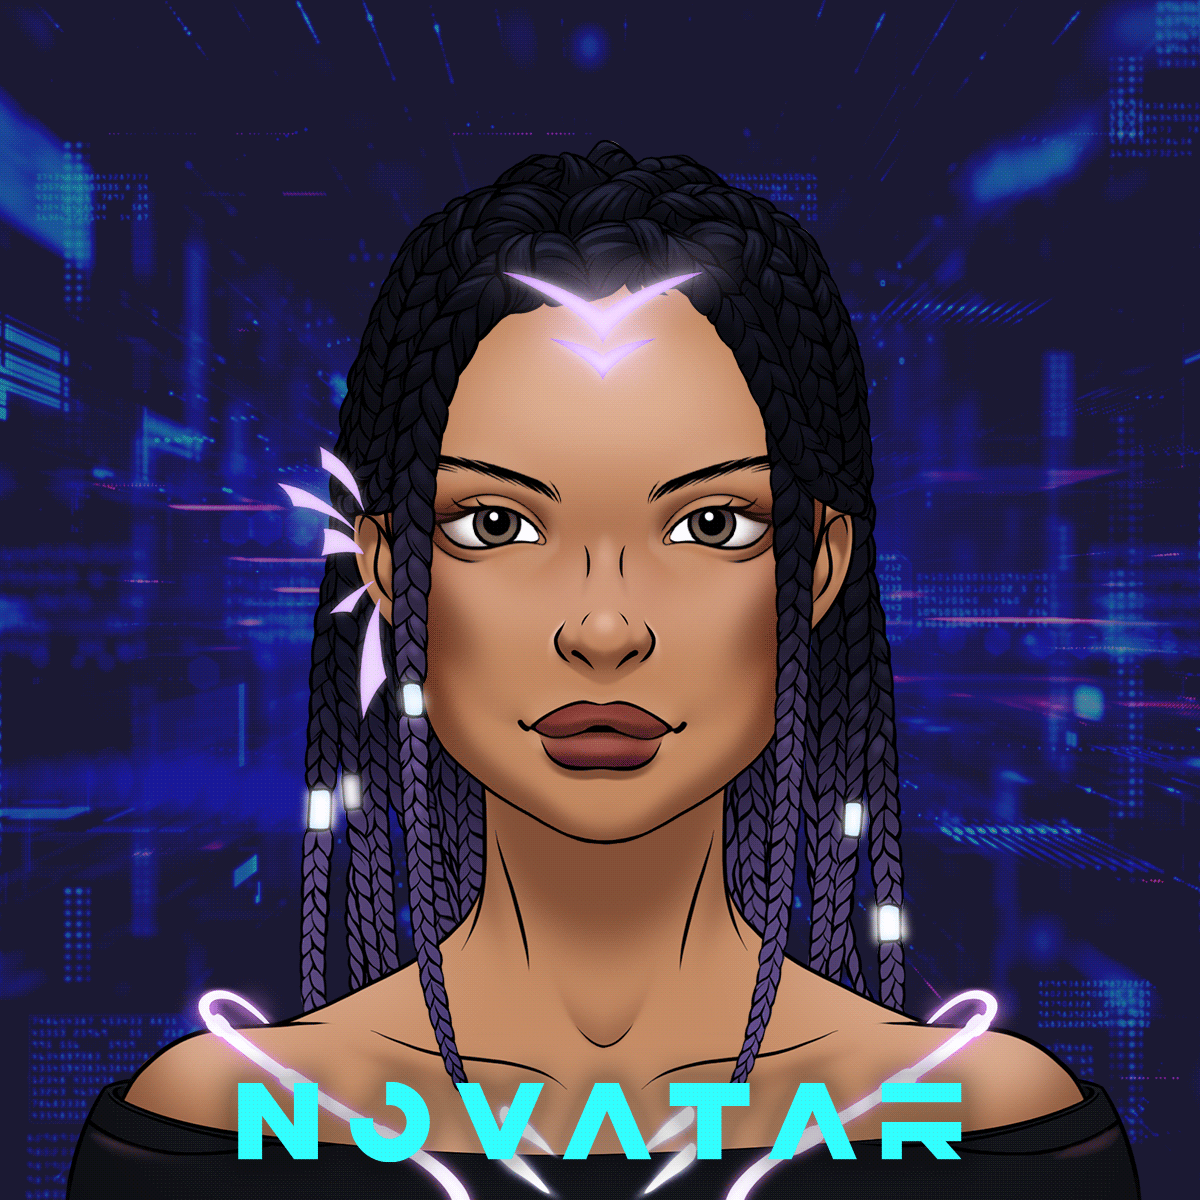 The Novatar